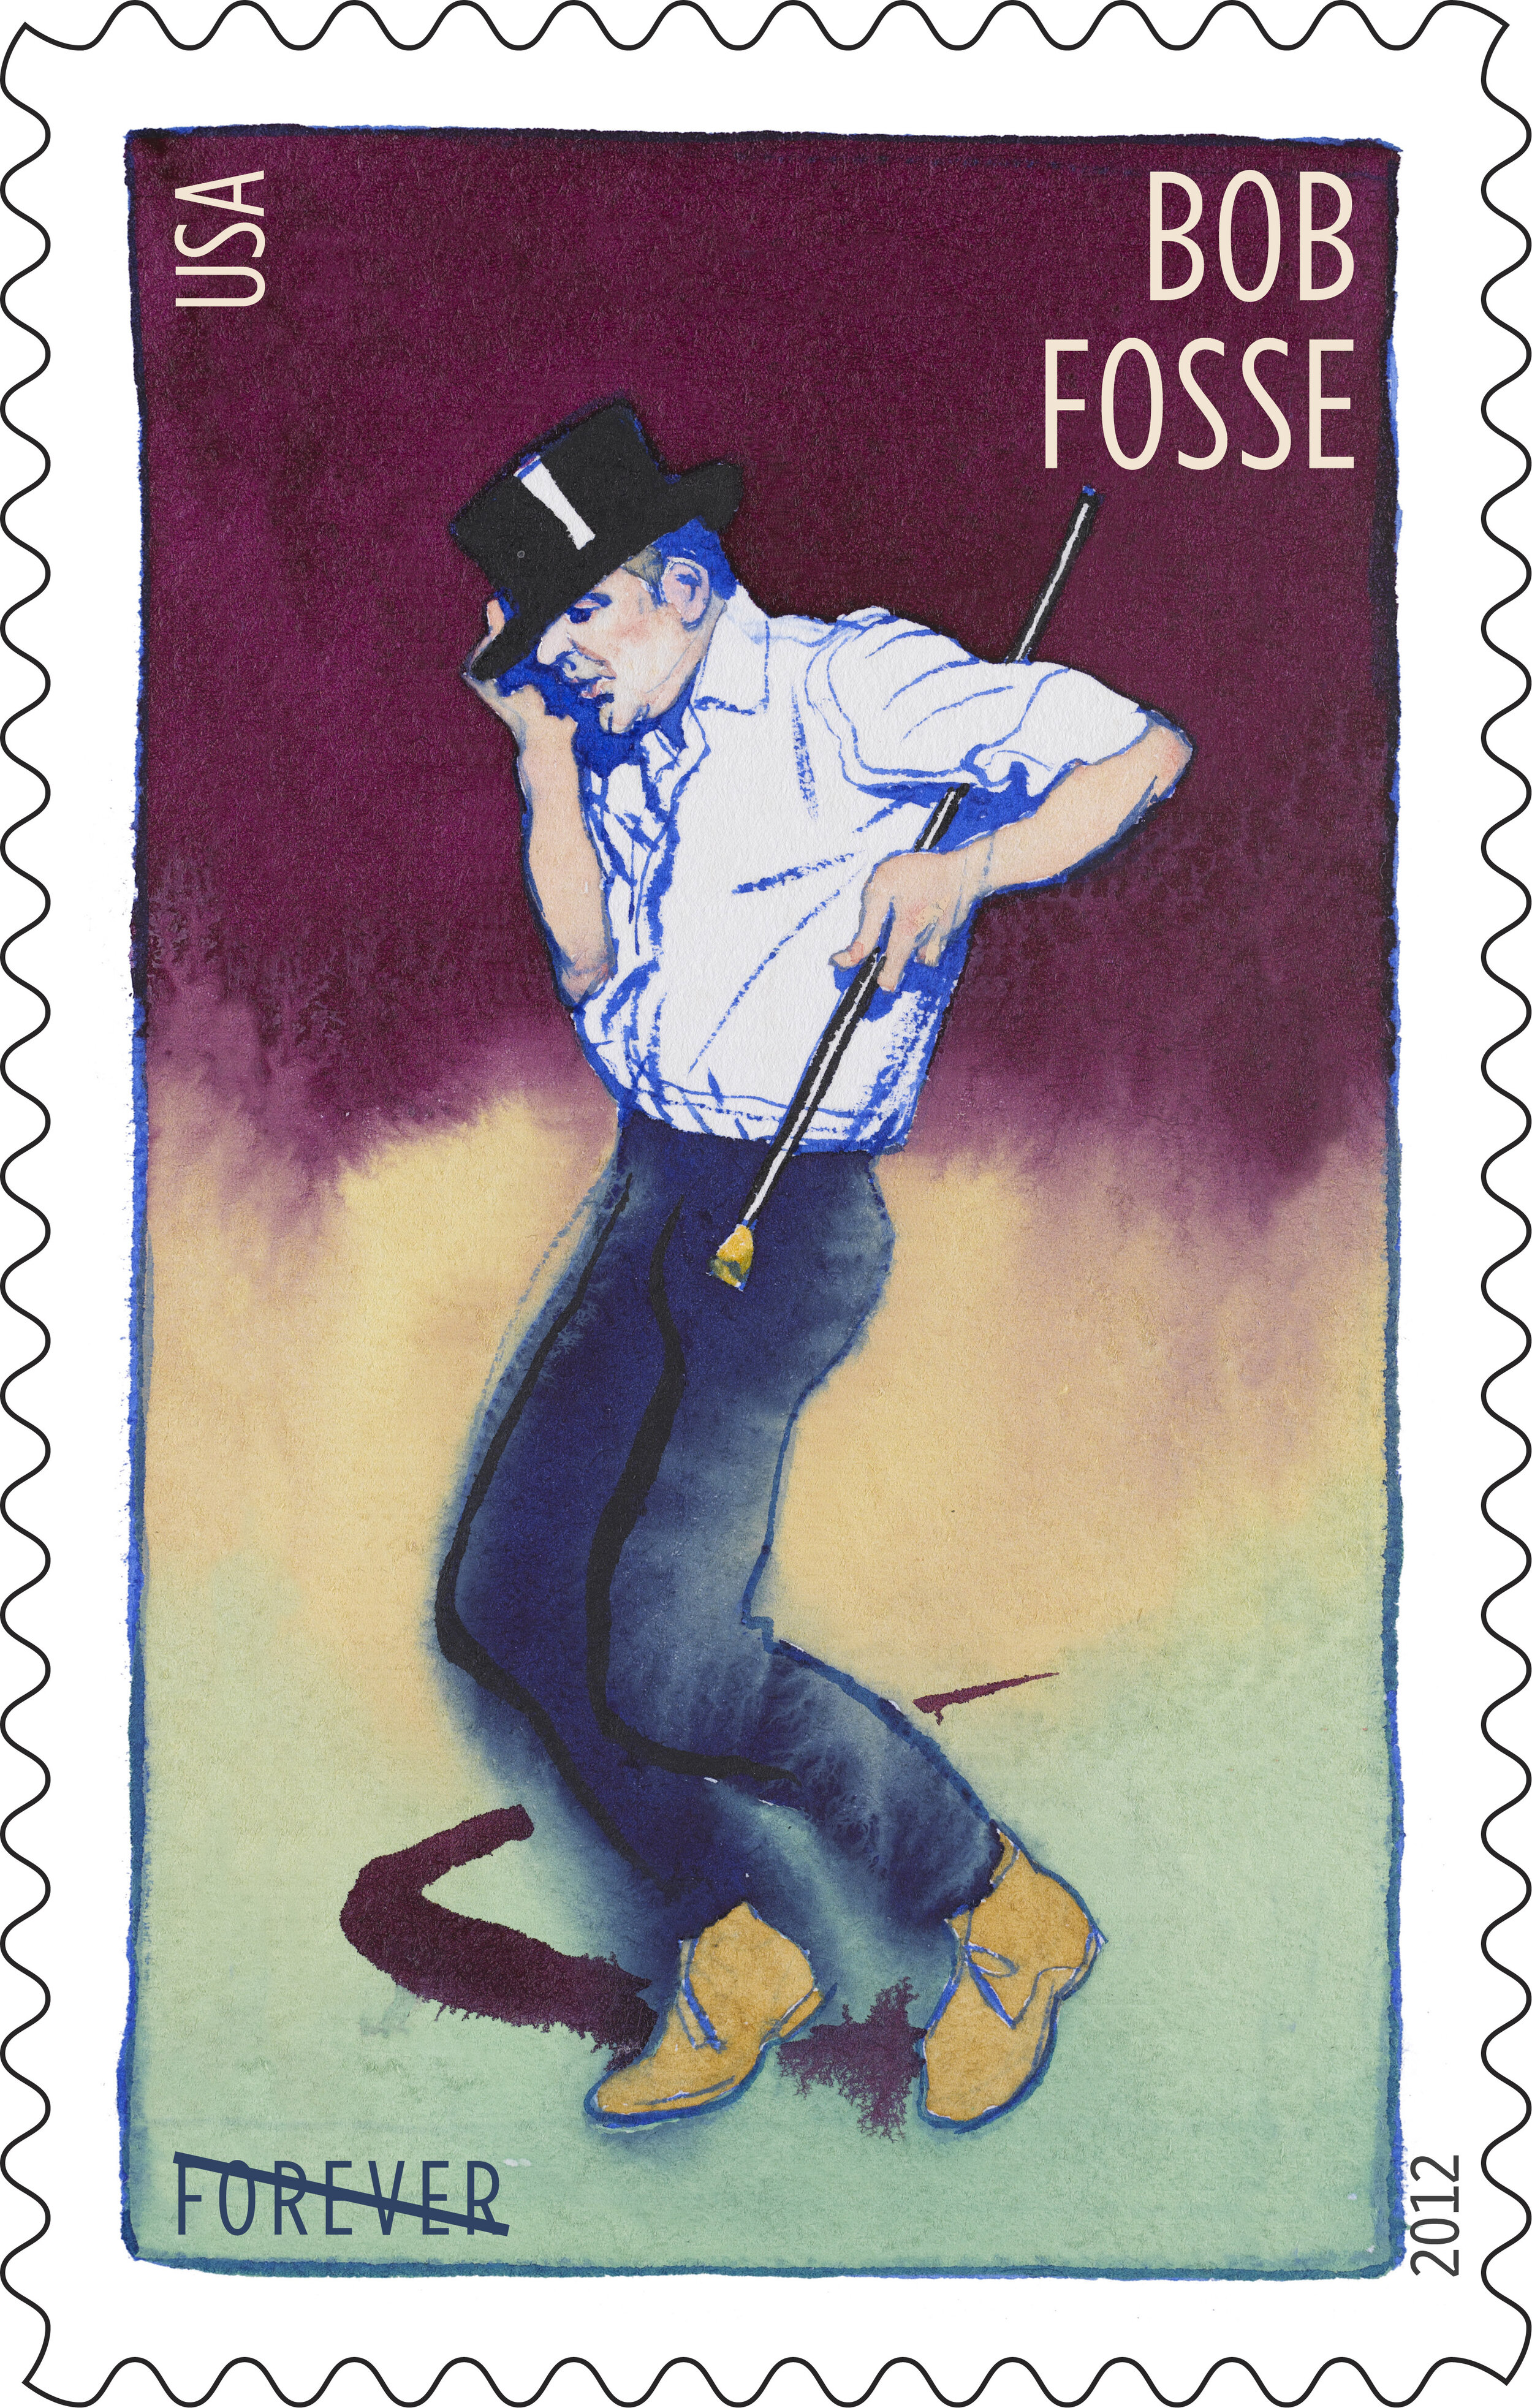 The Innovative Choreographers U.S. Postal Stamp series include Bob